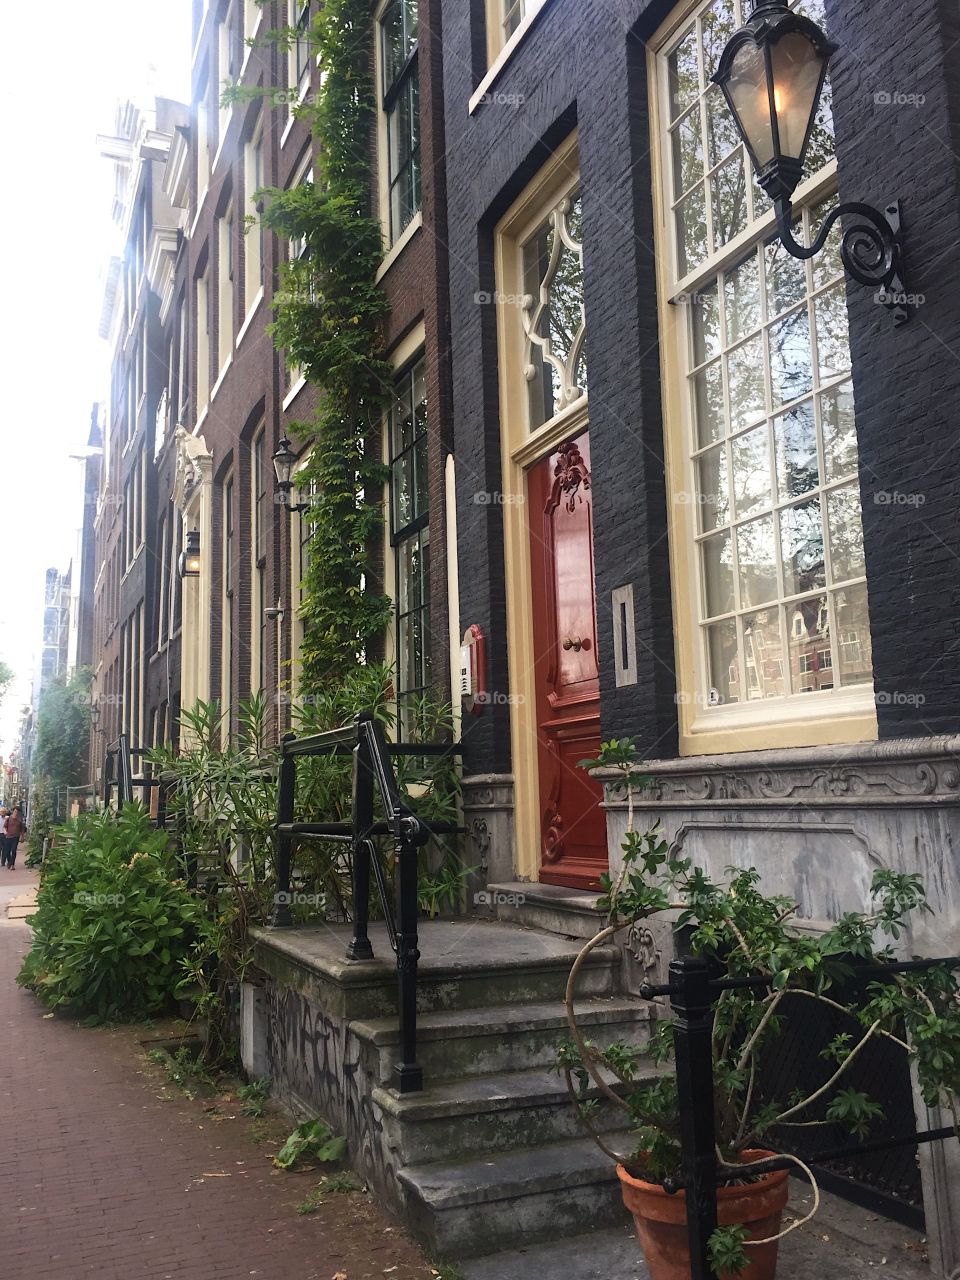 Streets of Amsterdam